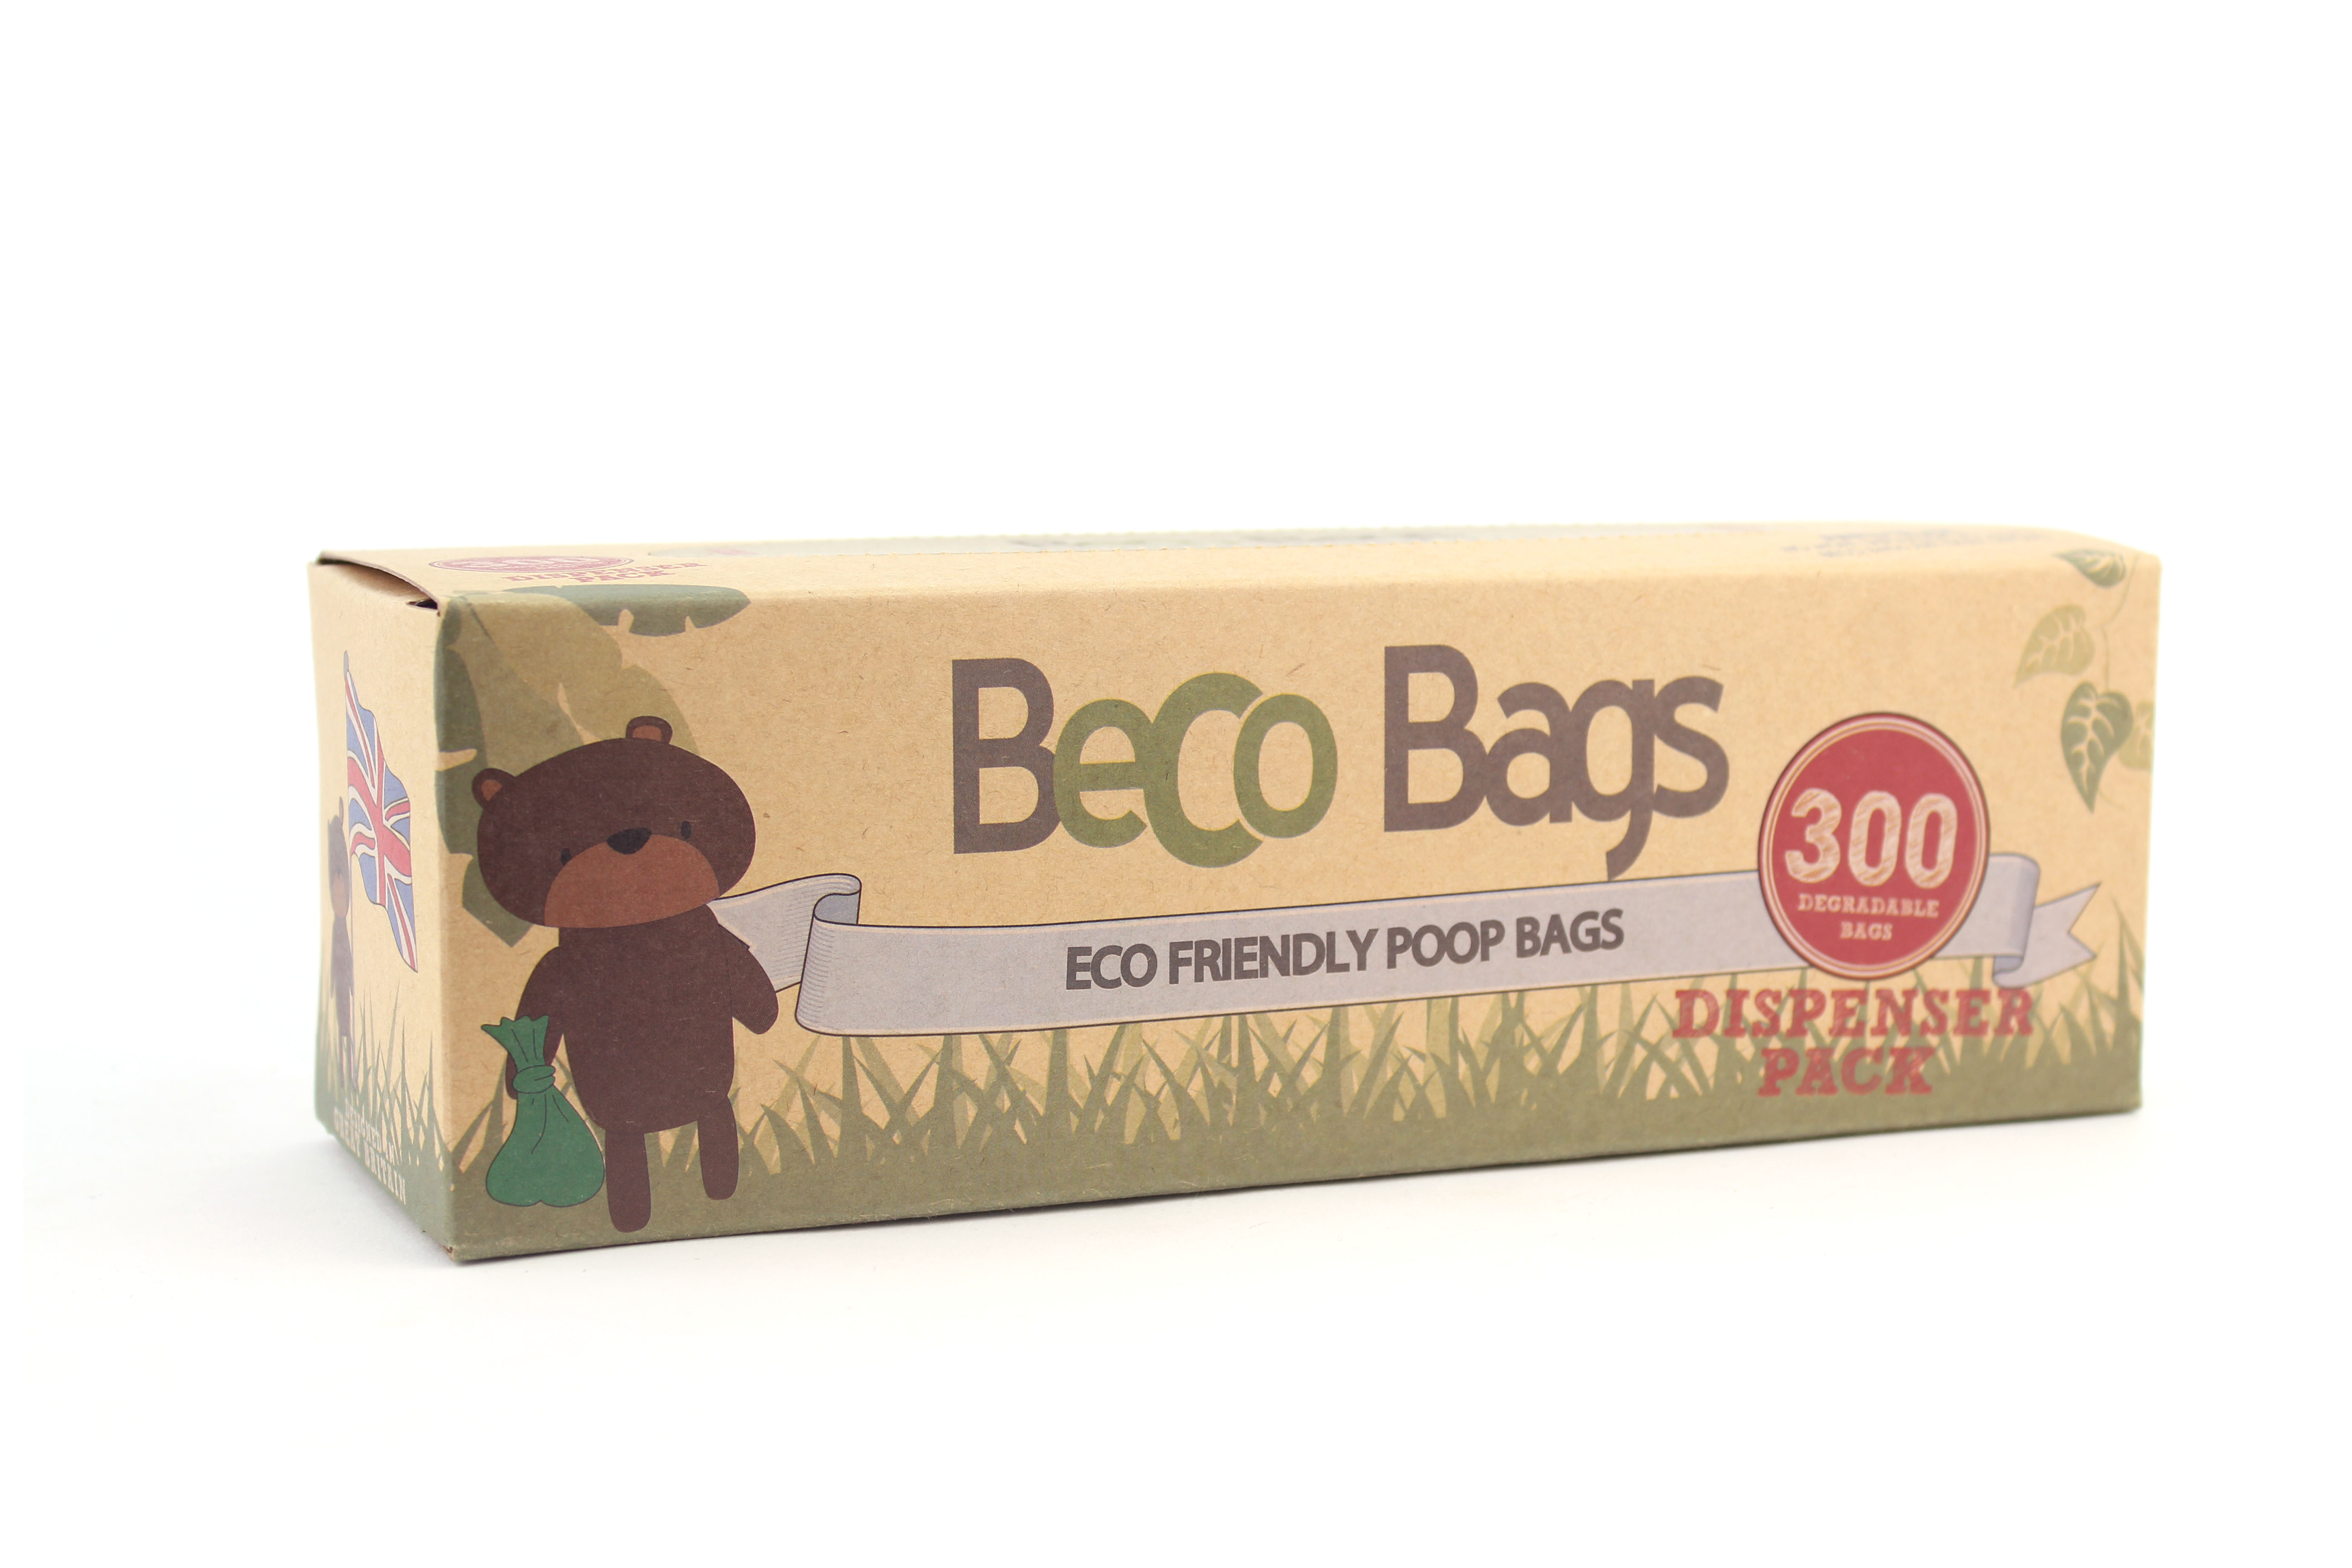 Beco Bags EKO sáčky na psí exkrementy 300 ks (1 role)